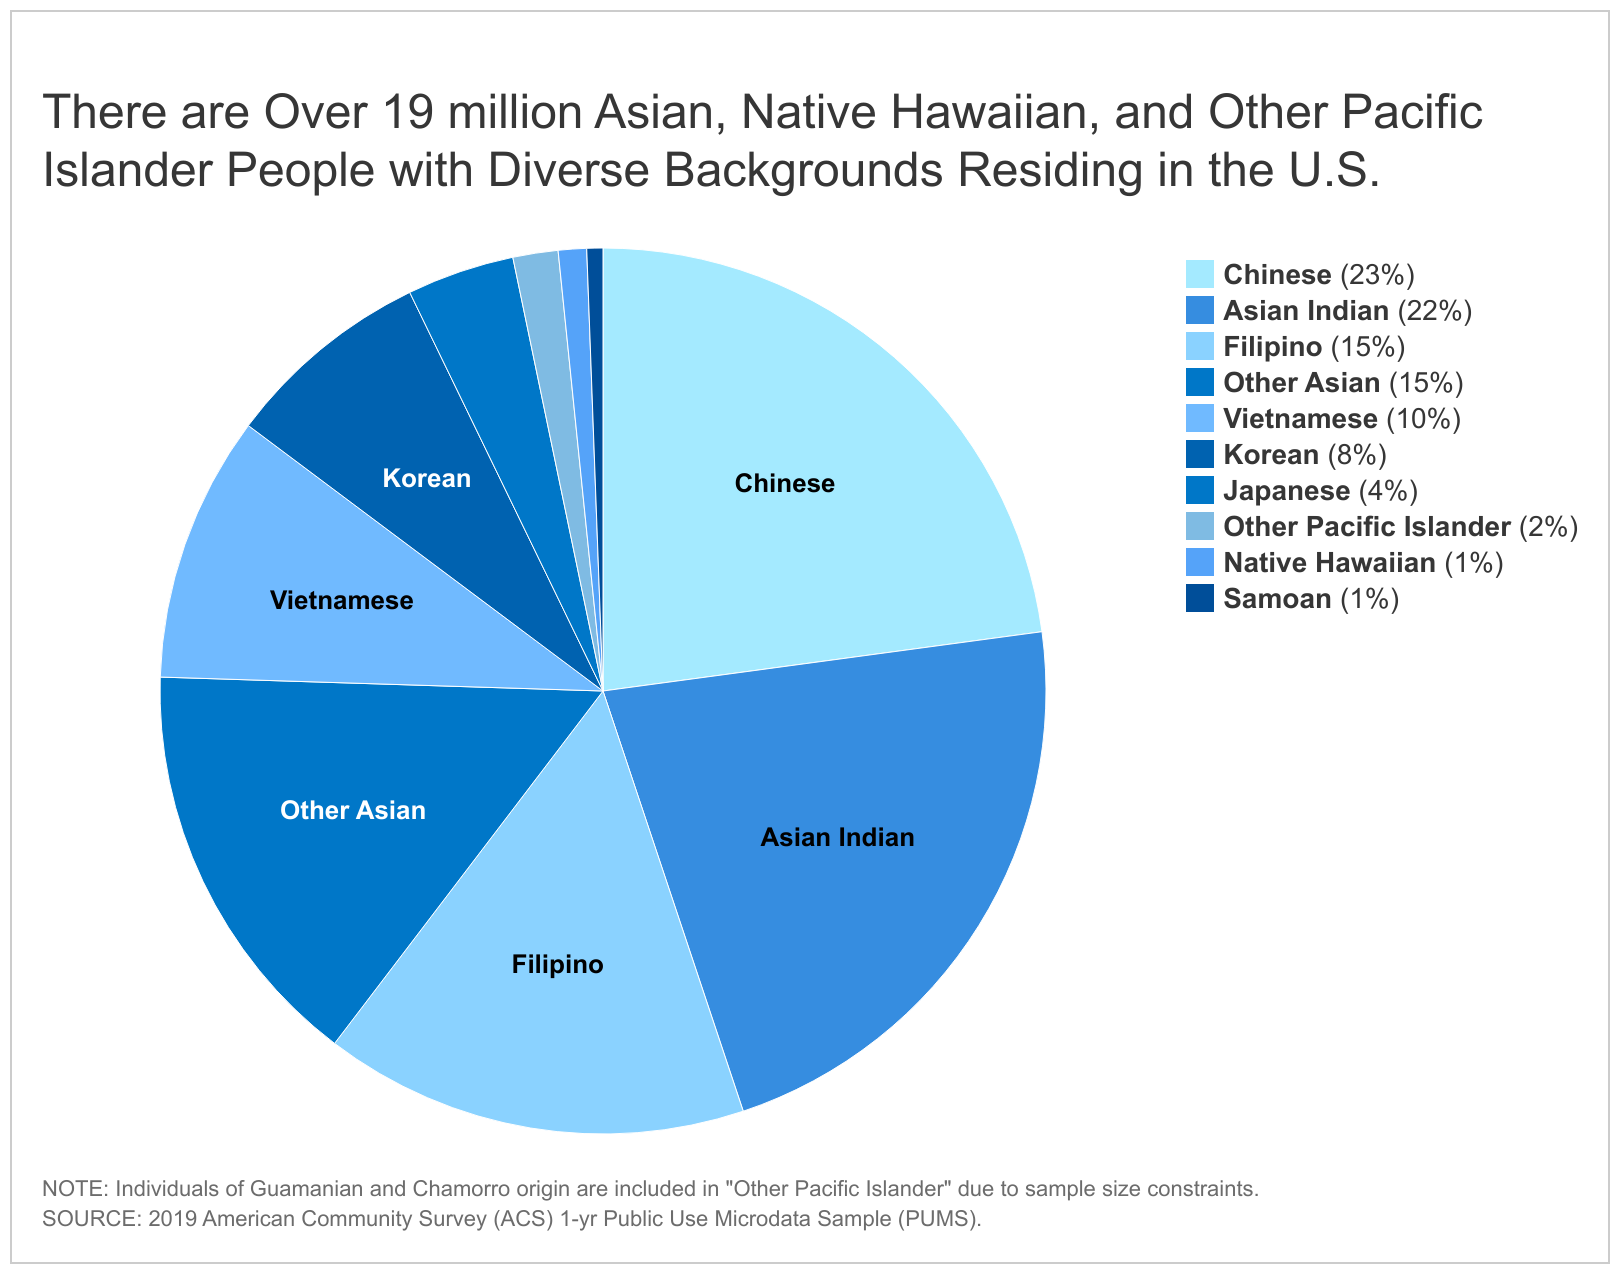 www.kff.org: Health Care Disparities Among Asian, Native Hawaiian, and Other Pacific Islander (NHOPI) People